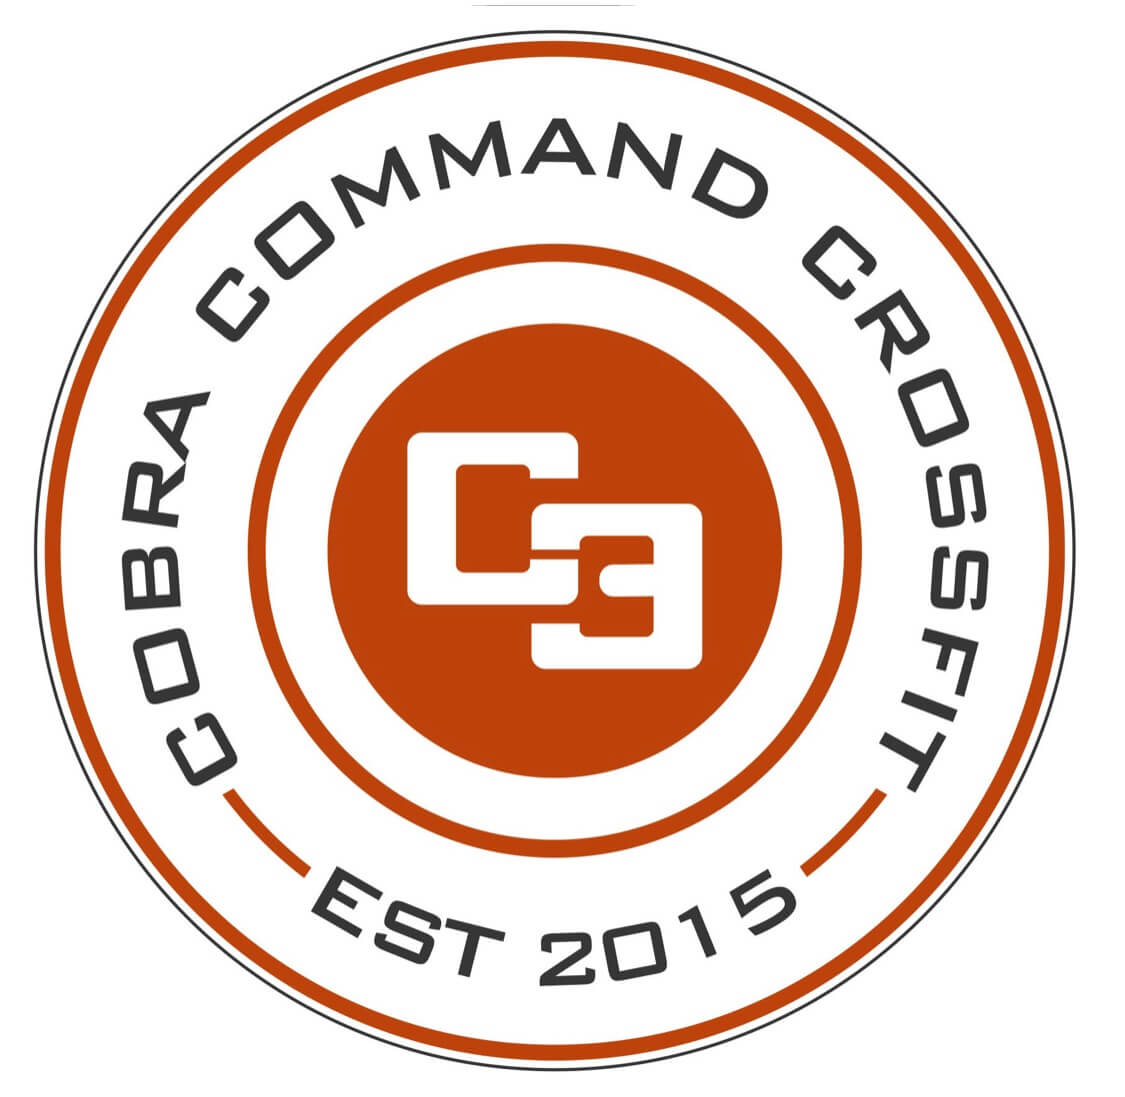 CrossFit Cobra Command